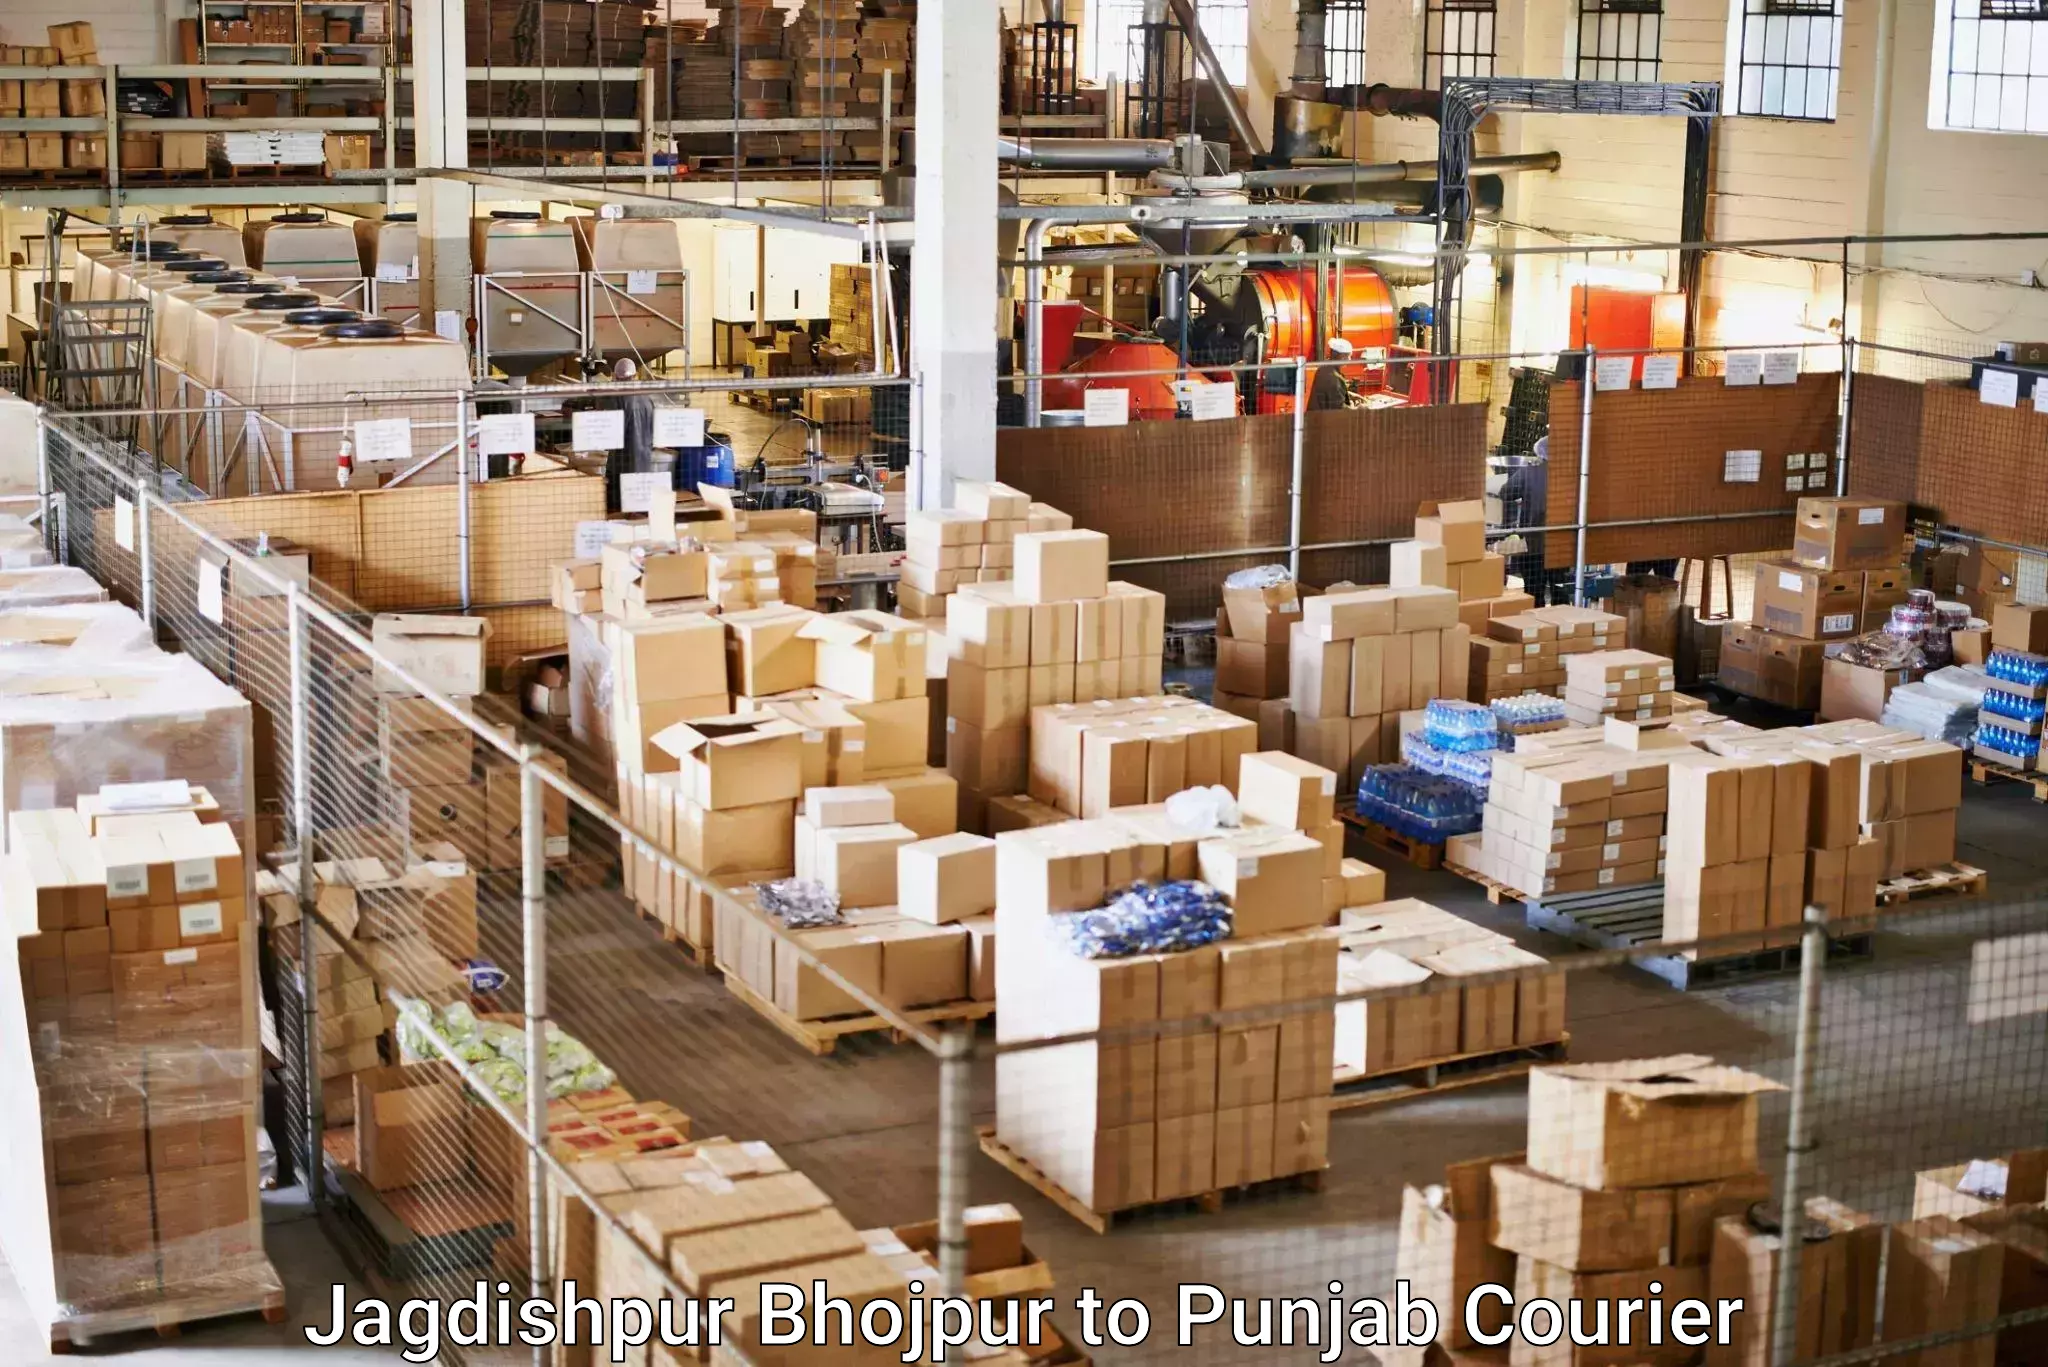 International parcel service Jagdishpur Bhojpur to Begowal